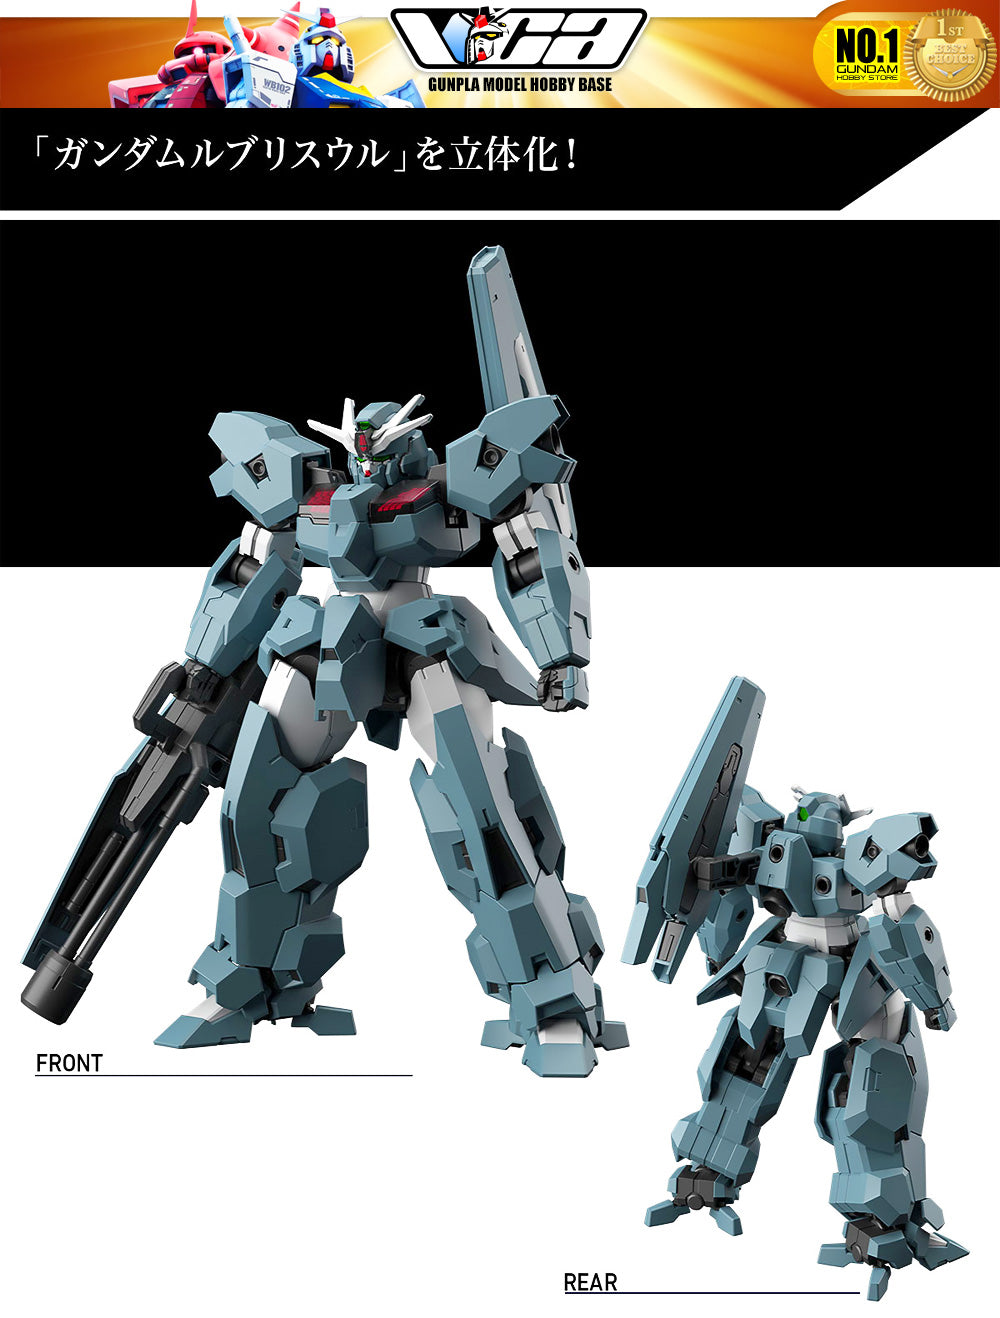 Bandai Gunpla High Grade The Witch From Mercury 1/144 HG Gundam Lfrith Ur Plastic Model Action Toy VCA Singapore